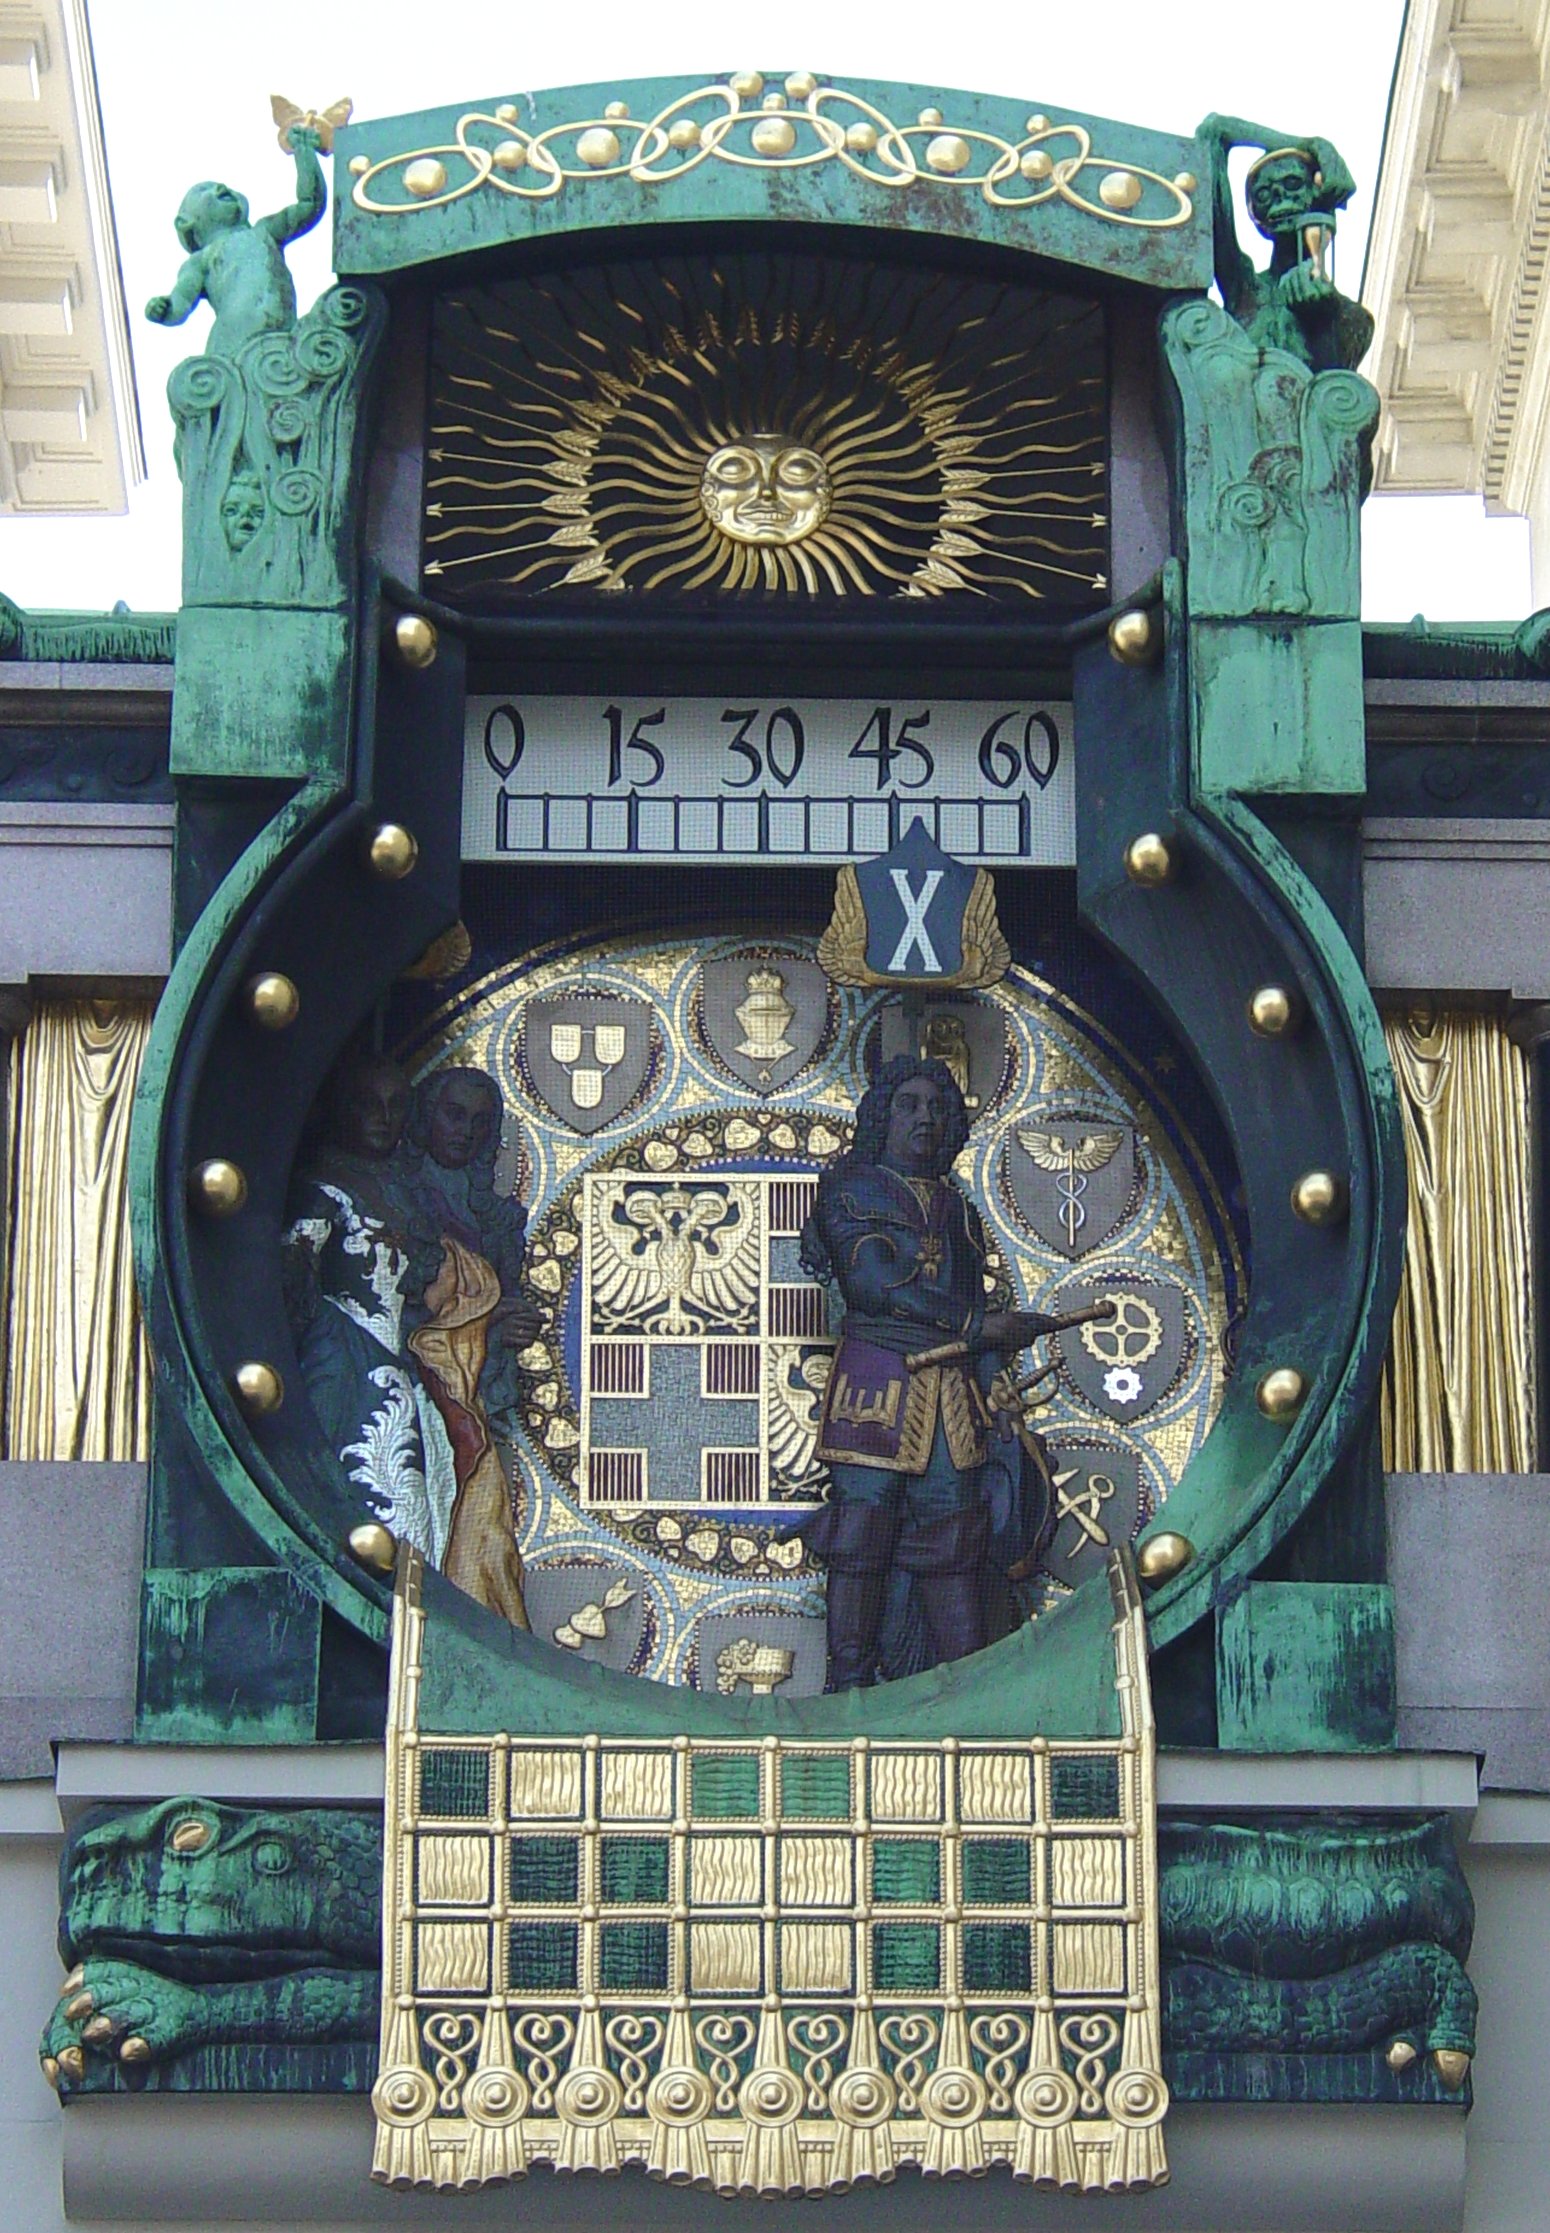 Vienna histpric clock